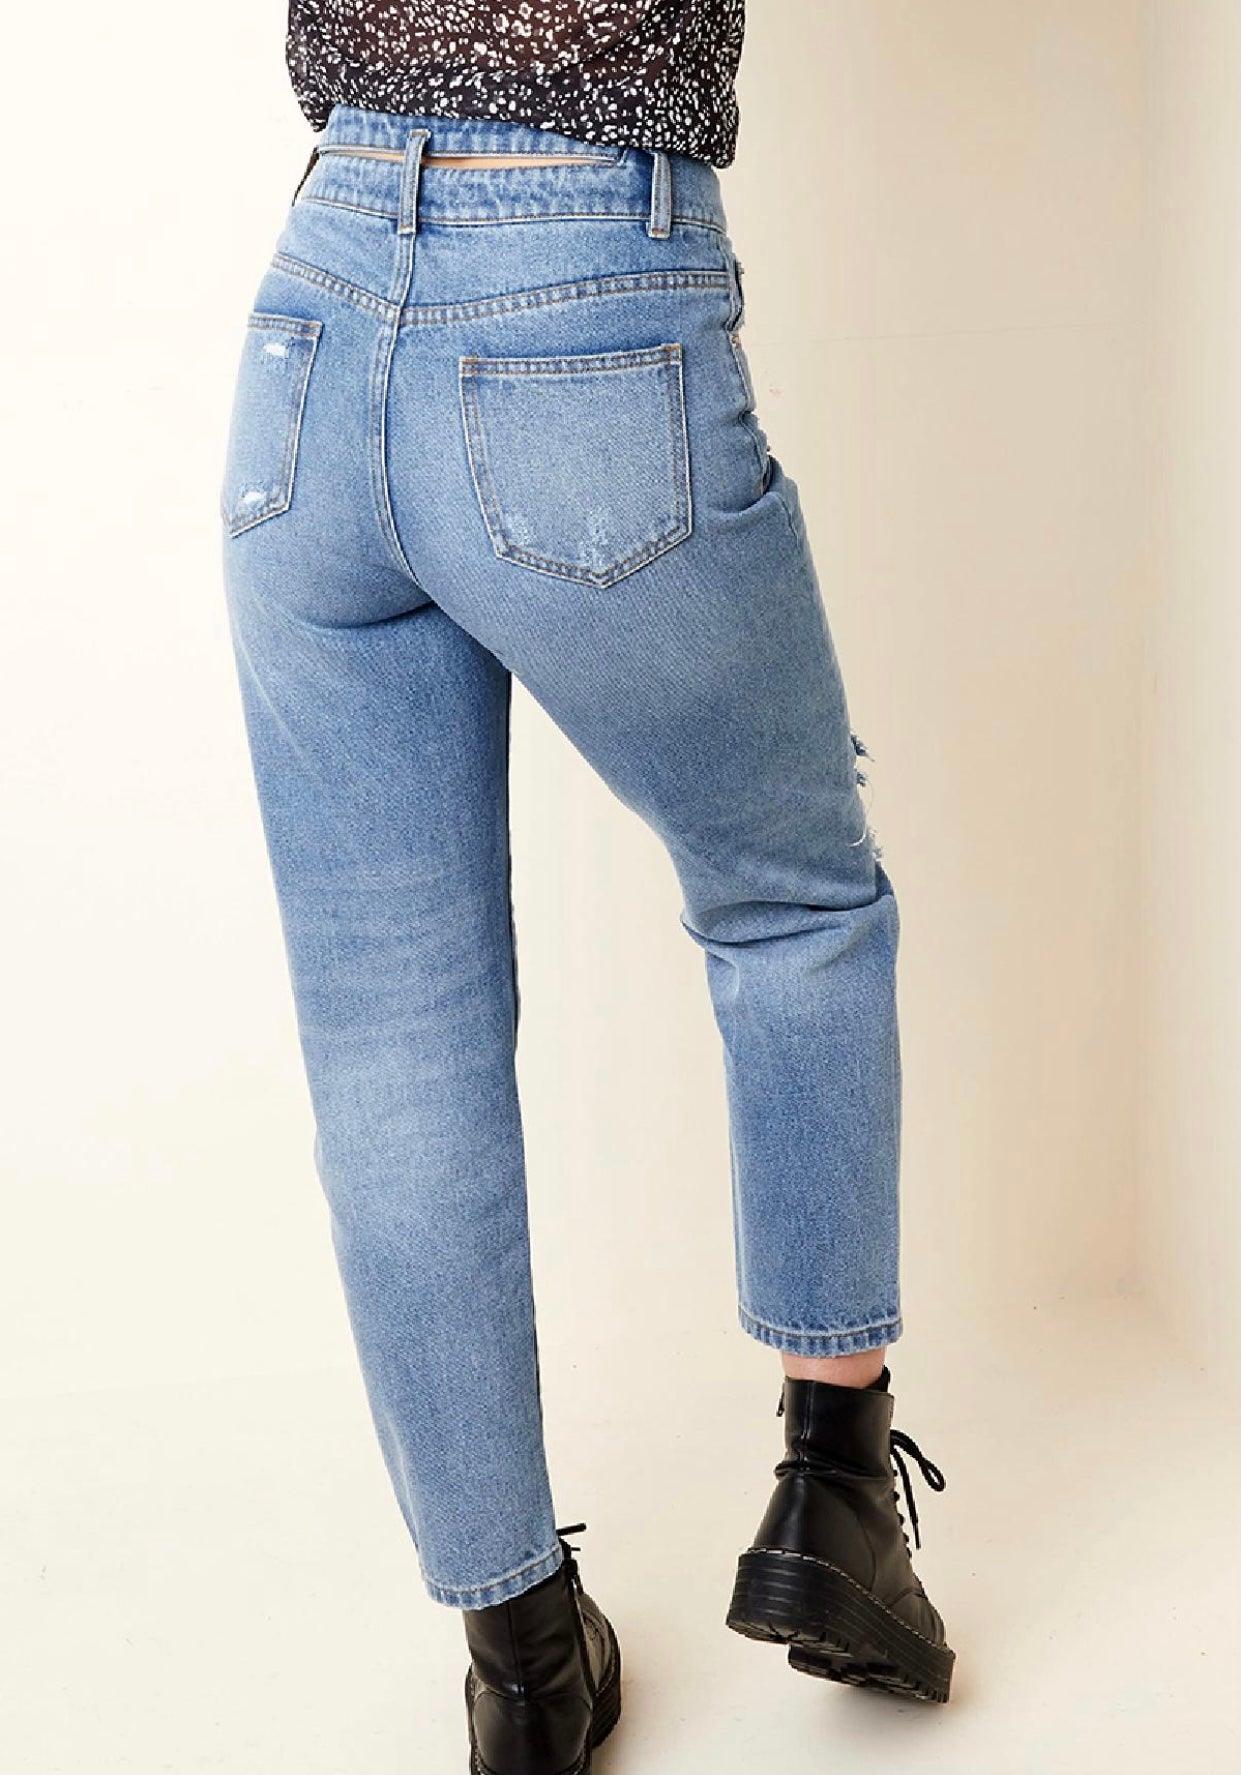 Enkellange versleten jeans met hoge taille - Amazing wardrobe